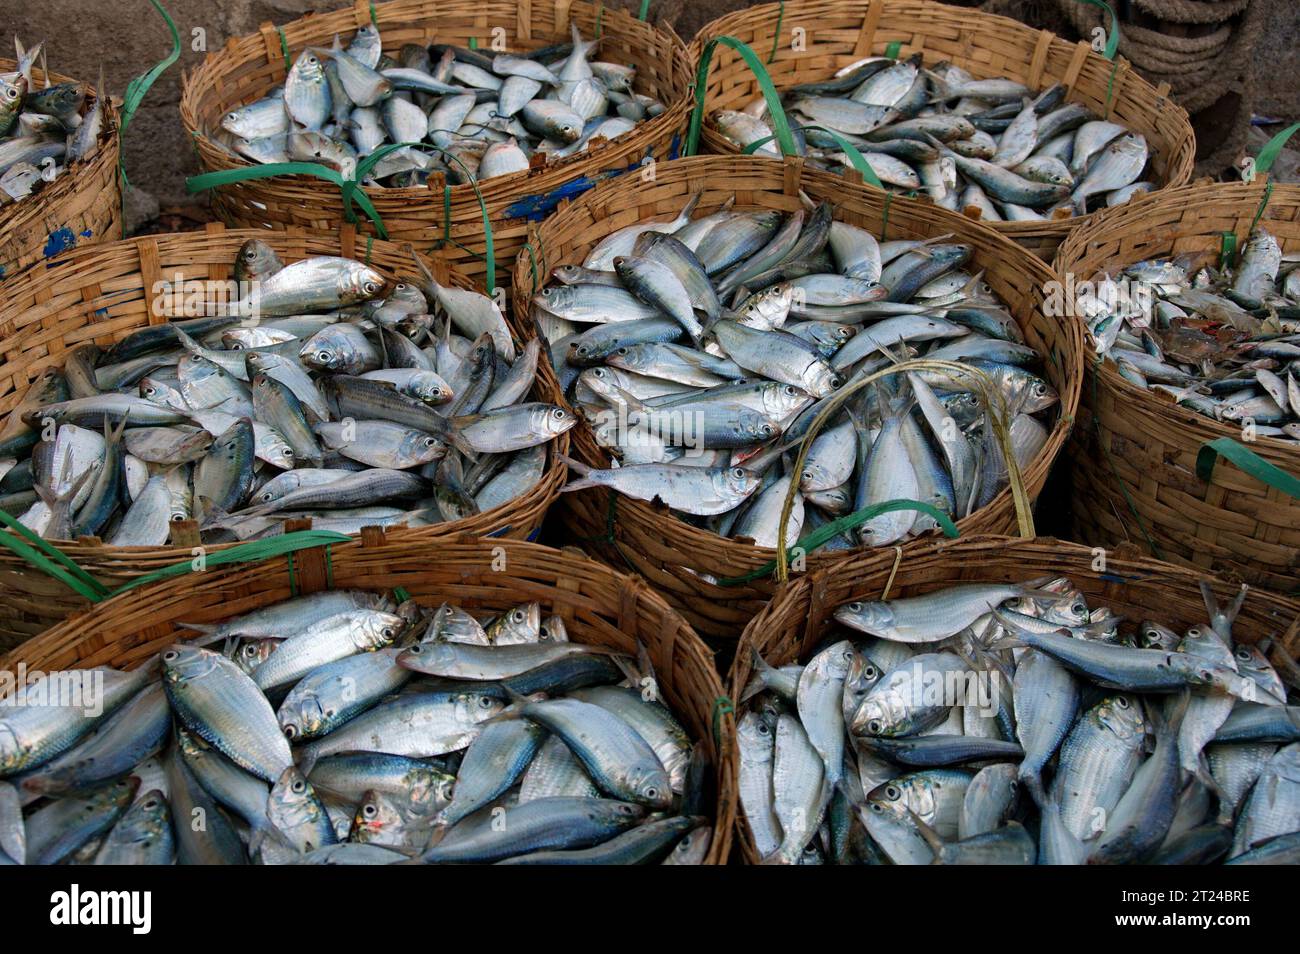 https://c8.alamy.com/comp/2T24BRE/wicker-baskets-full-of-fish-in-fishing-village-indonesia-2T24BRE.jpg